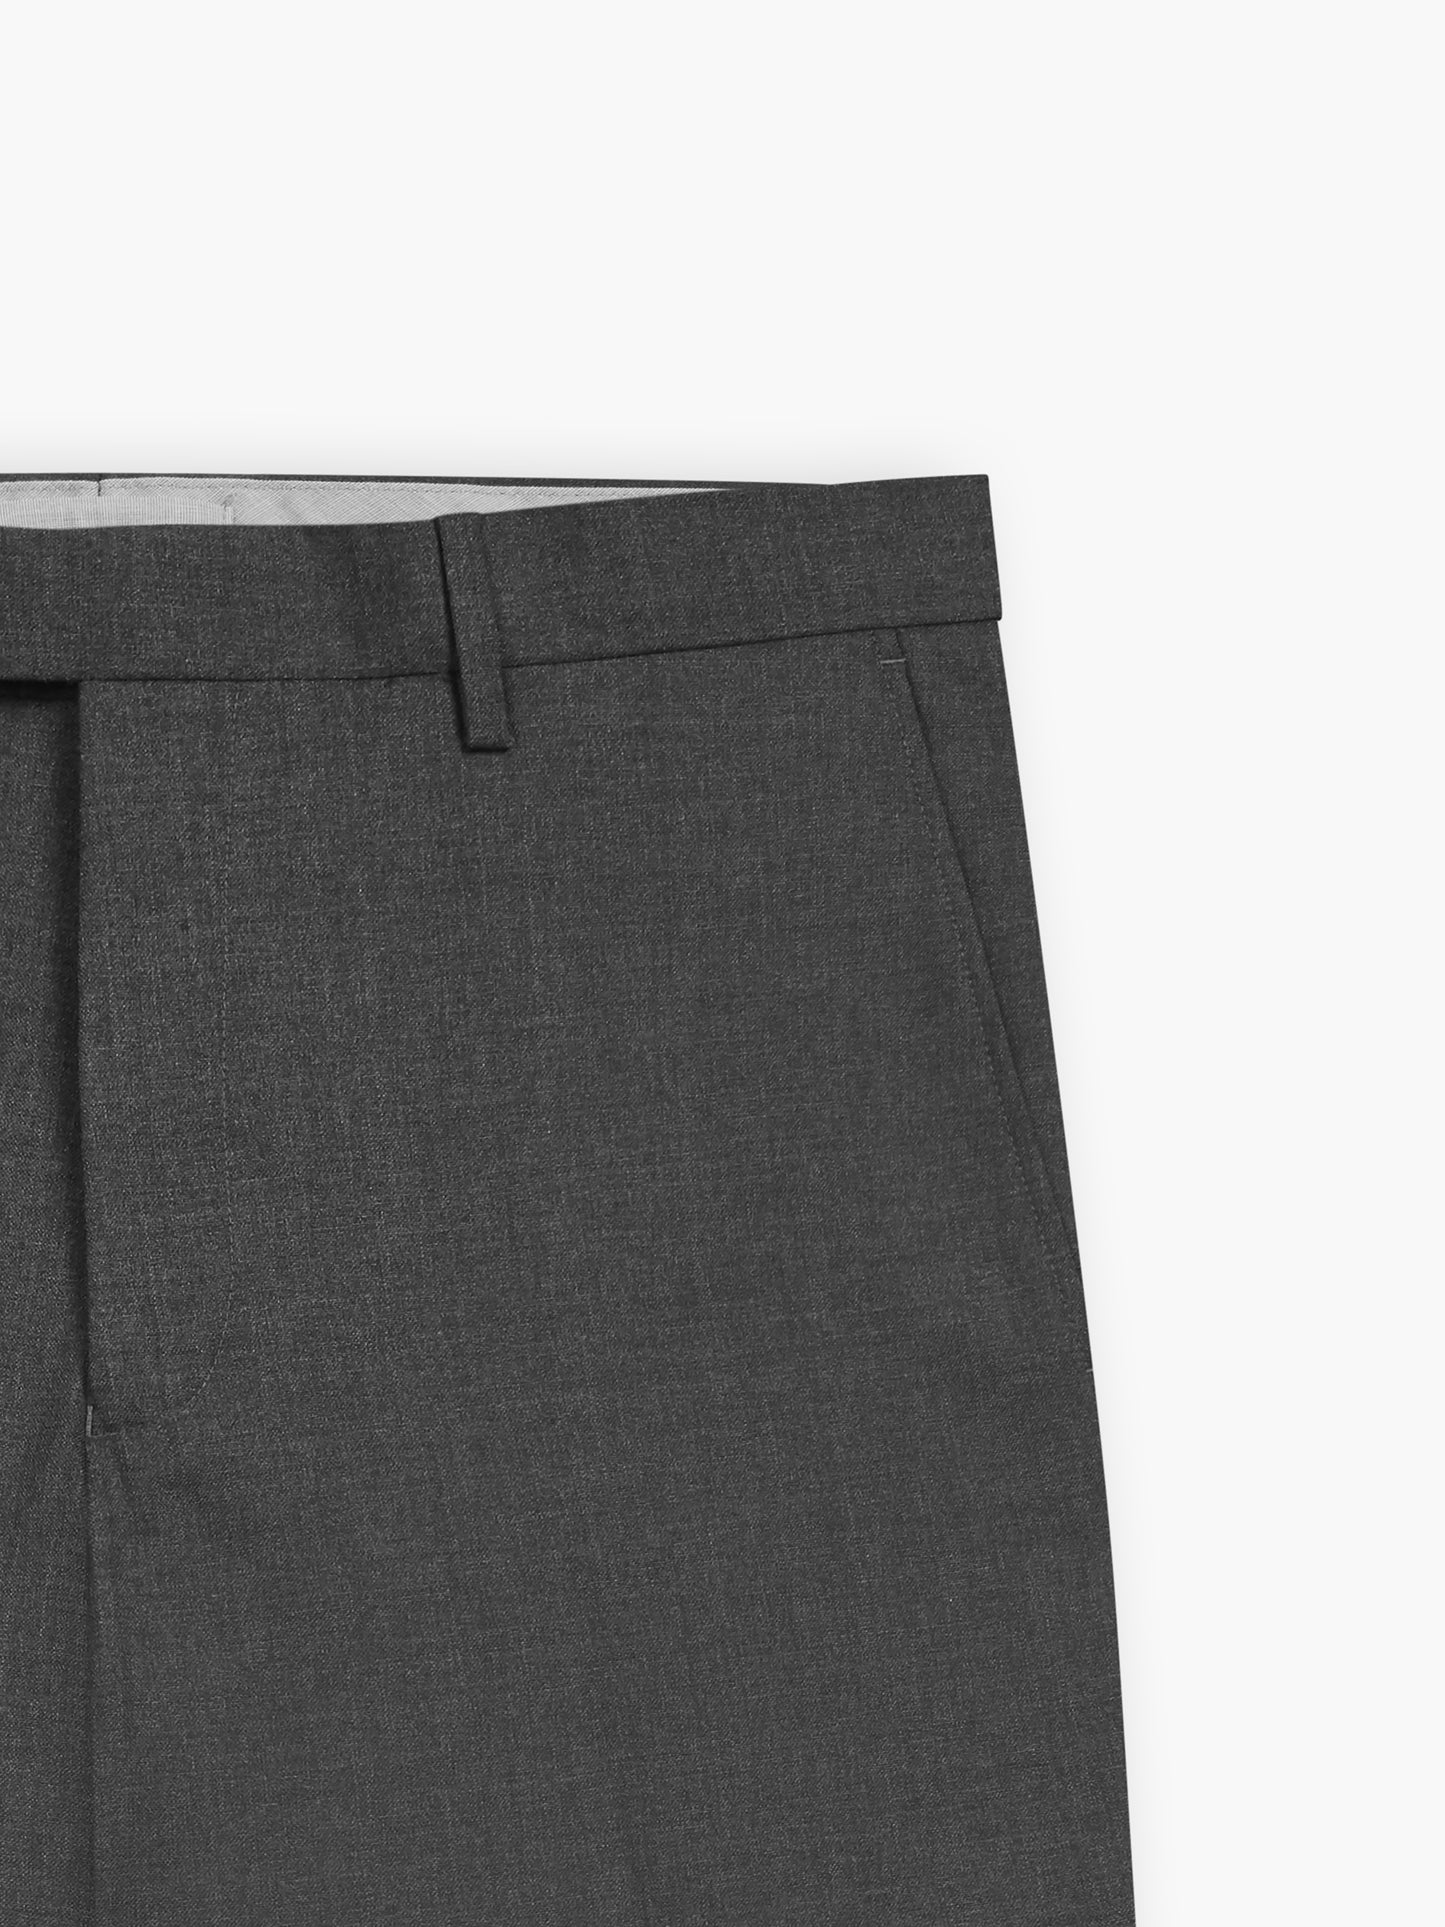 Barbican Italian Luxury Slim Charcoal Suit Trouser